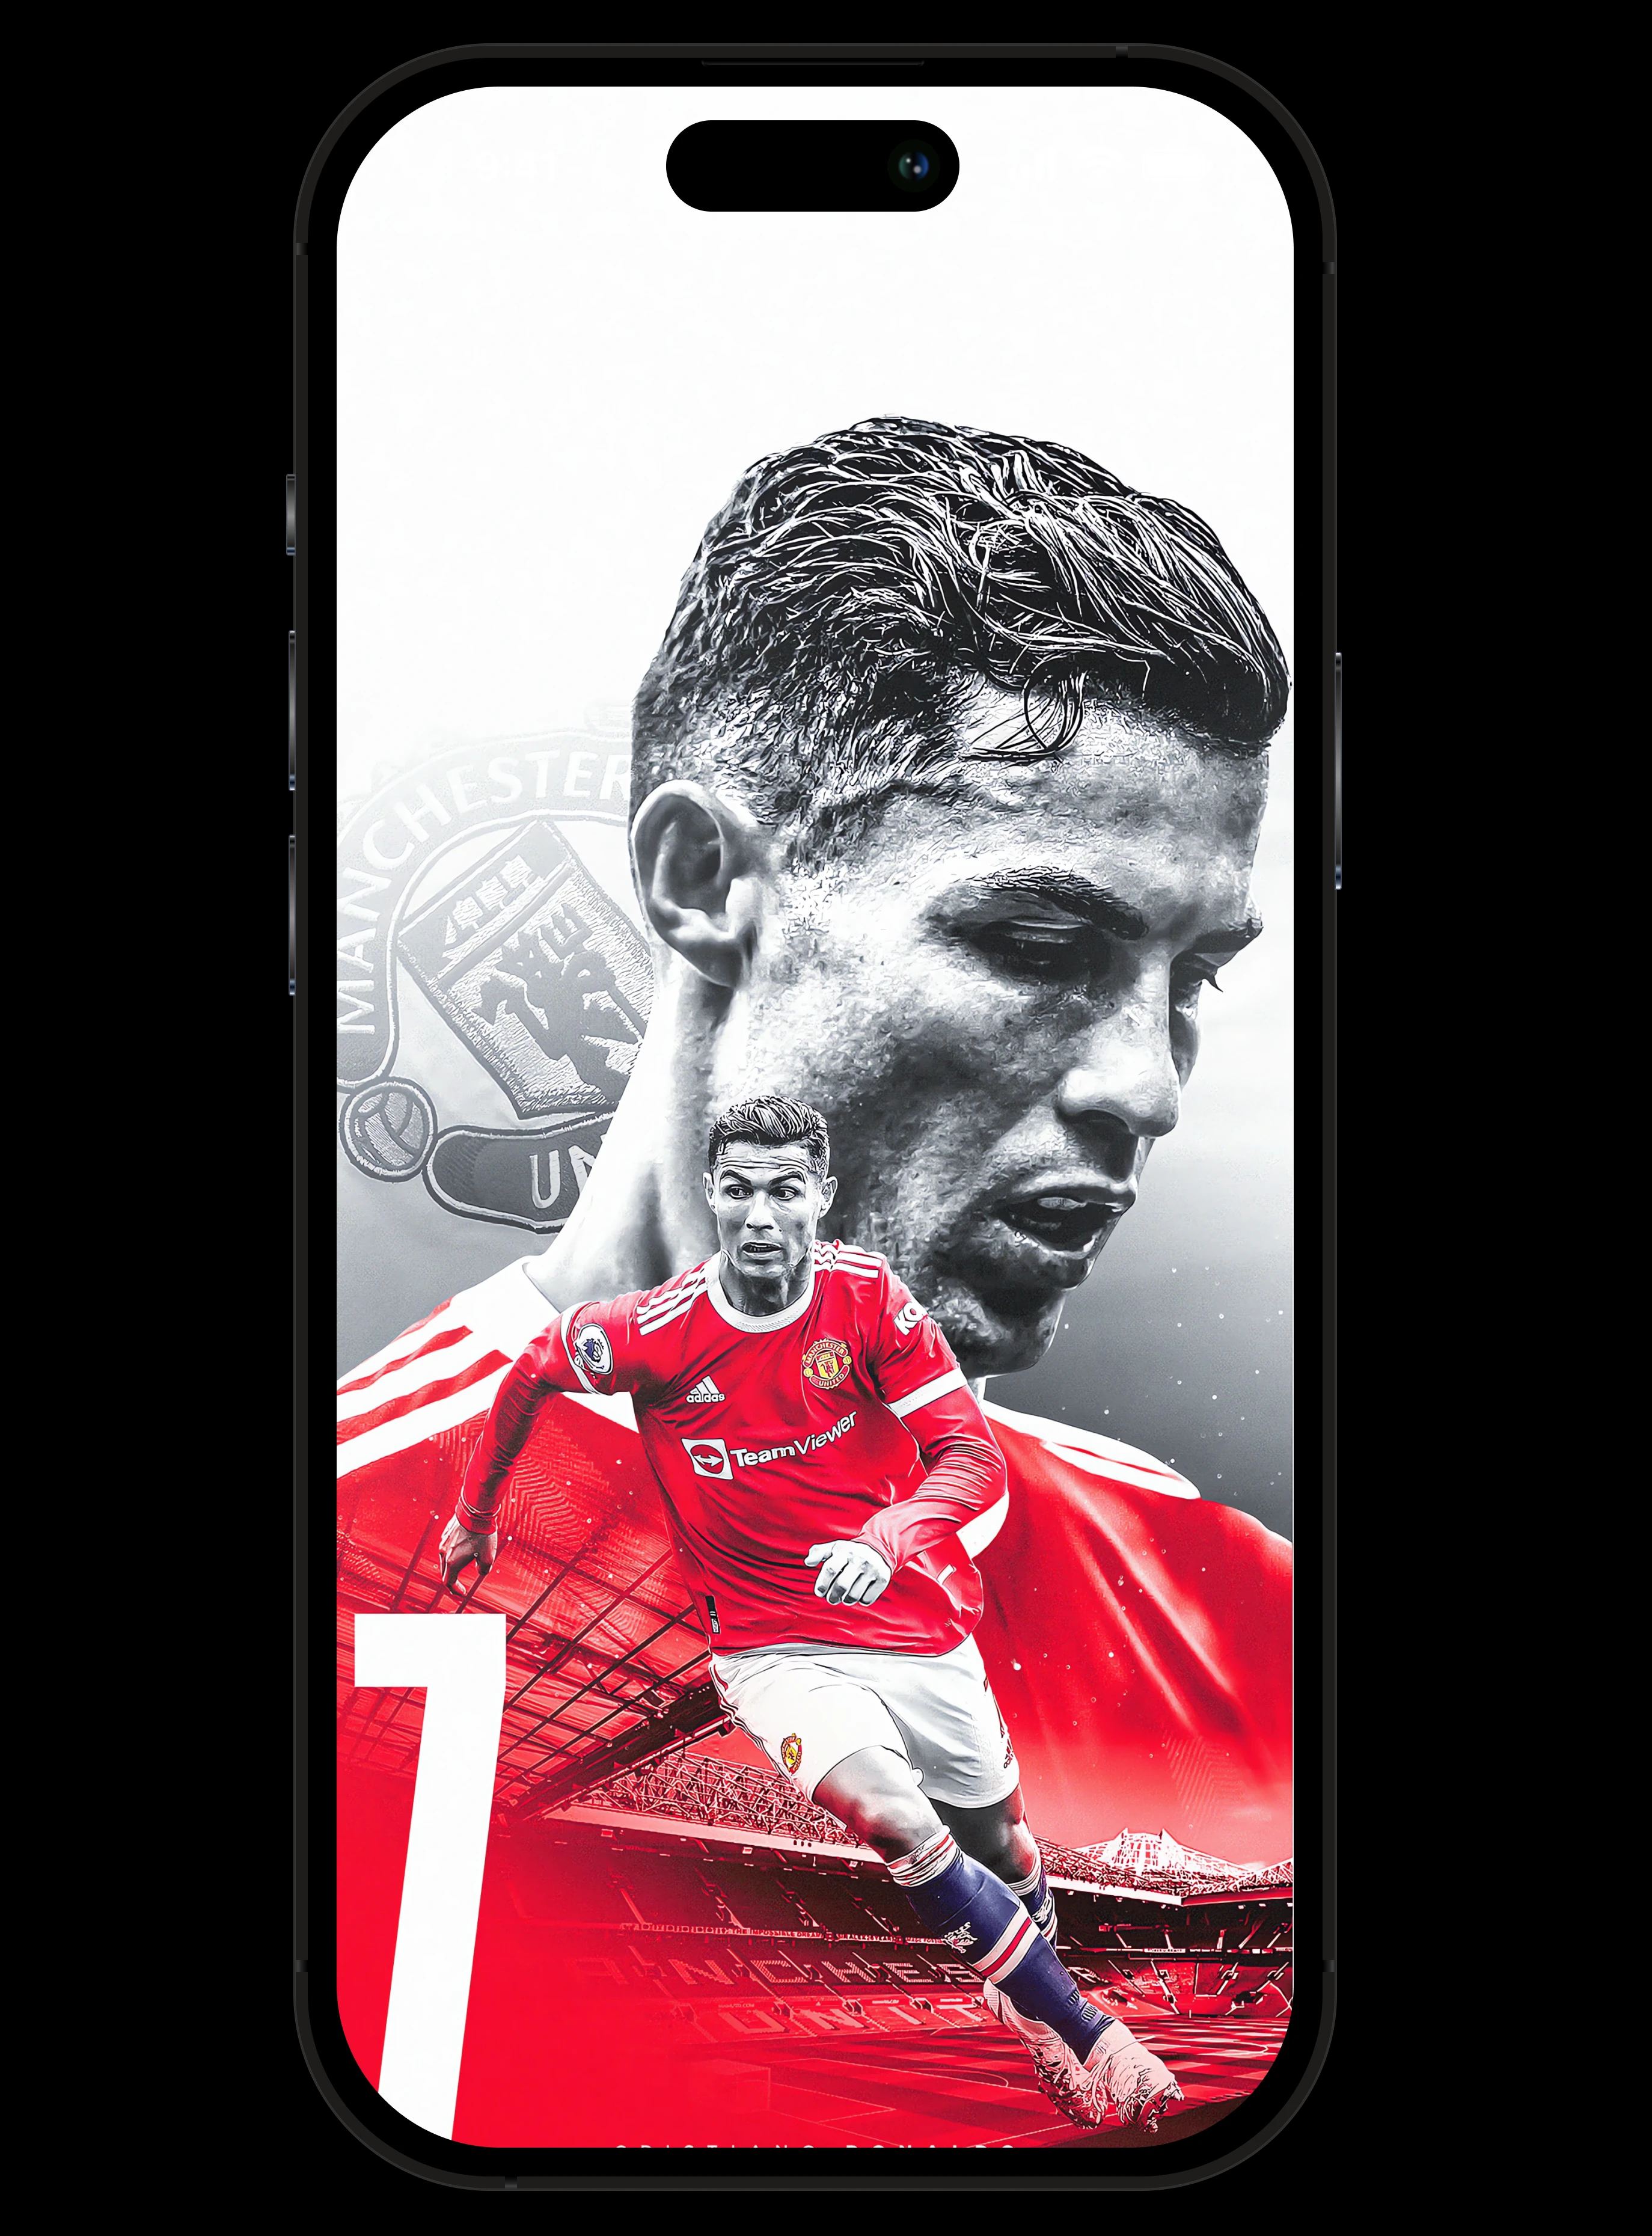 Cristiano Ronaldo iPhone Wallpaper 4k